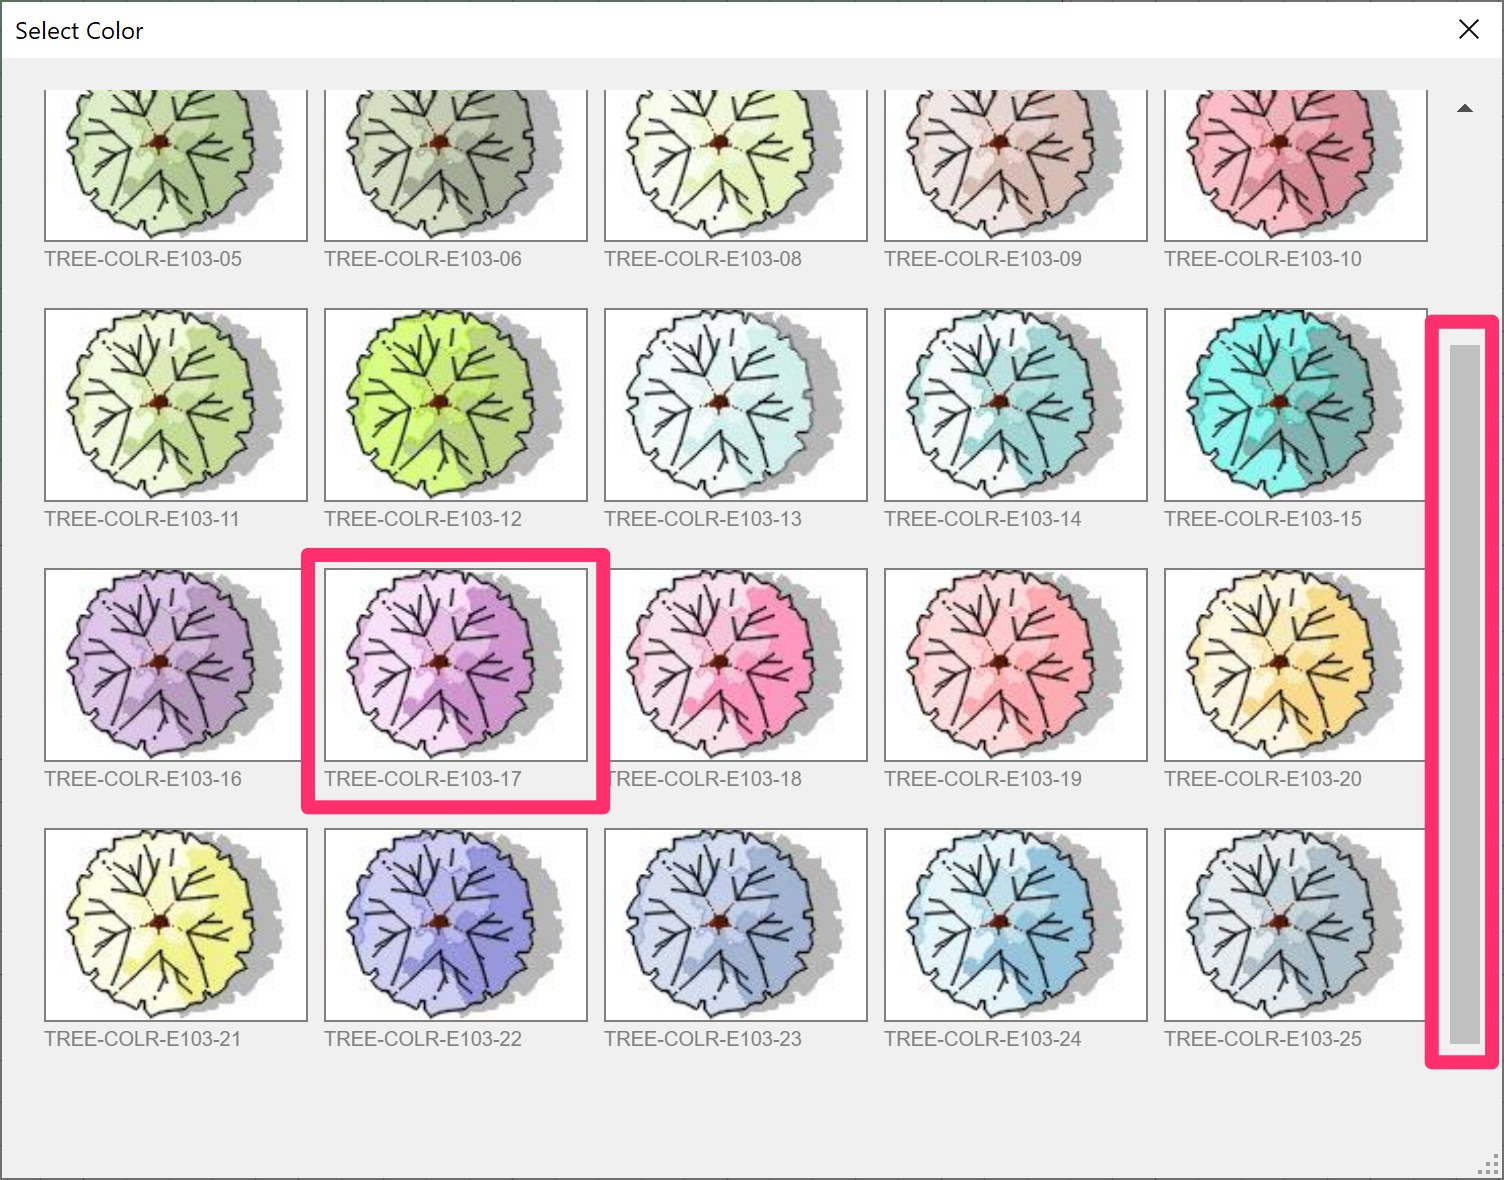 Select Color dialog box, tree color symbols